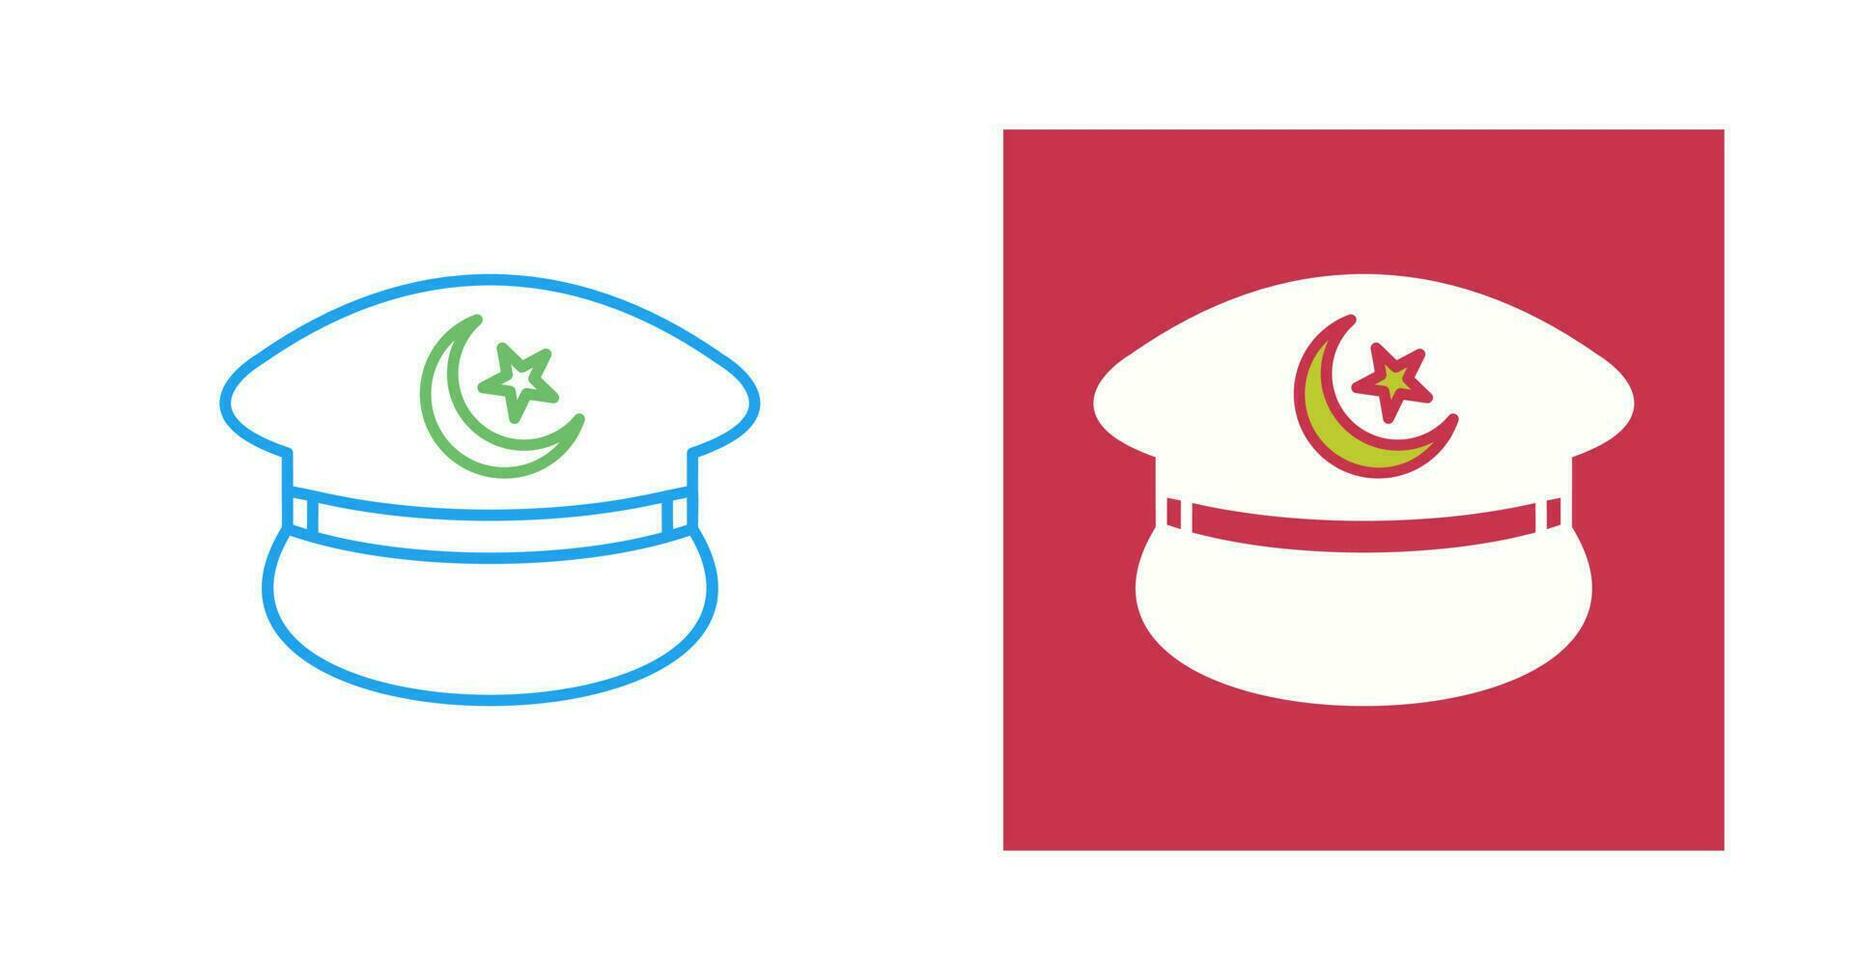 ícone de vetor de chapéu militar